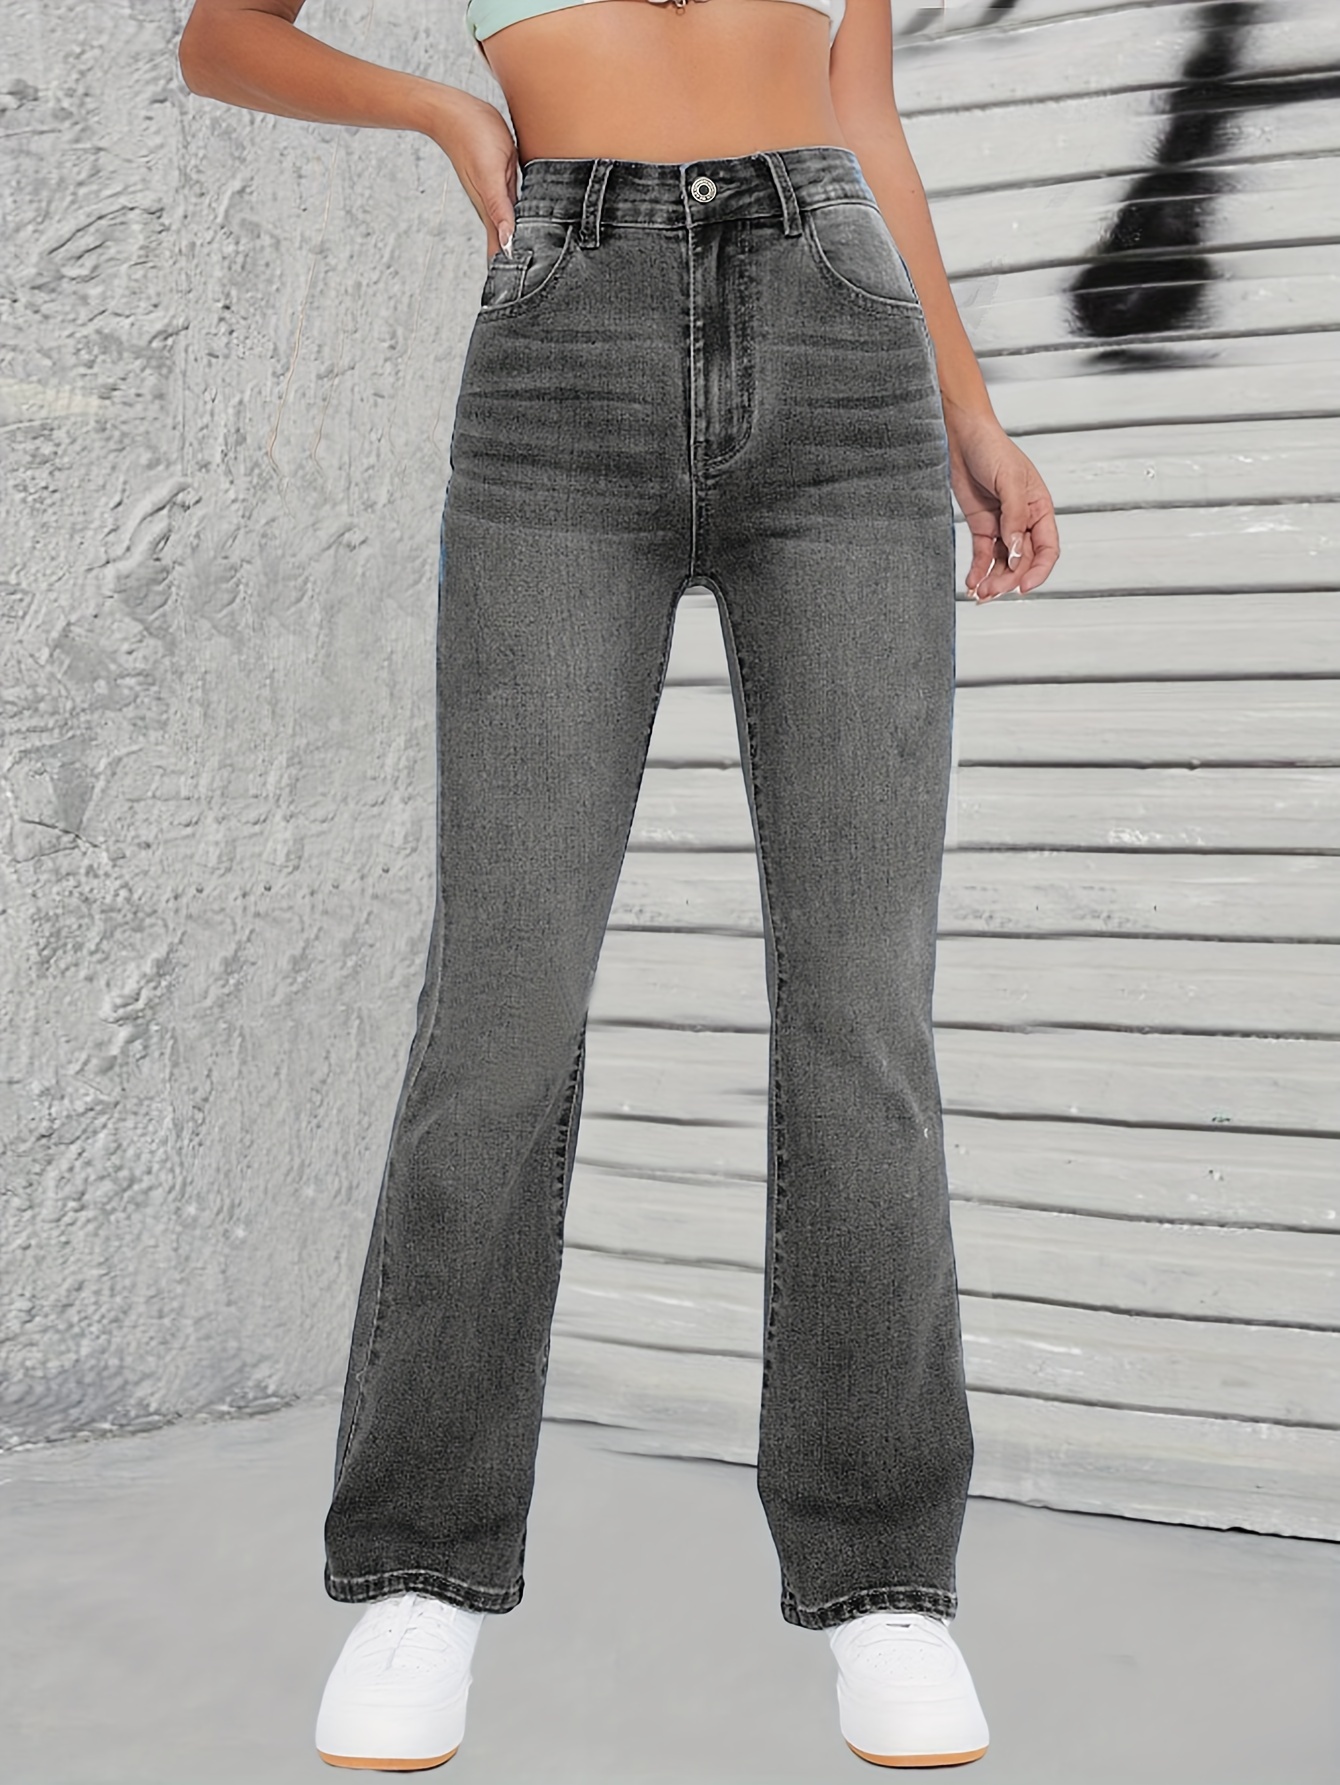 Jeans De Jeans Femeninos Jeans Jeans Altos De La Cintura Ancha De 23,86 €